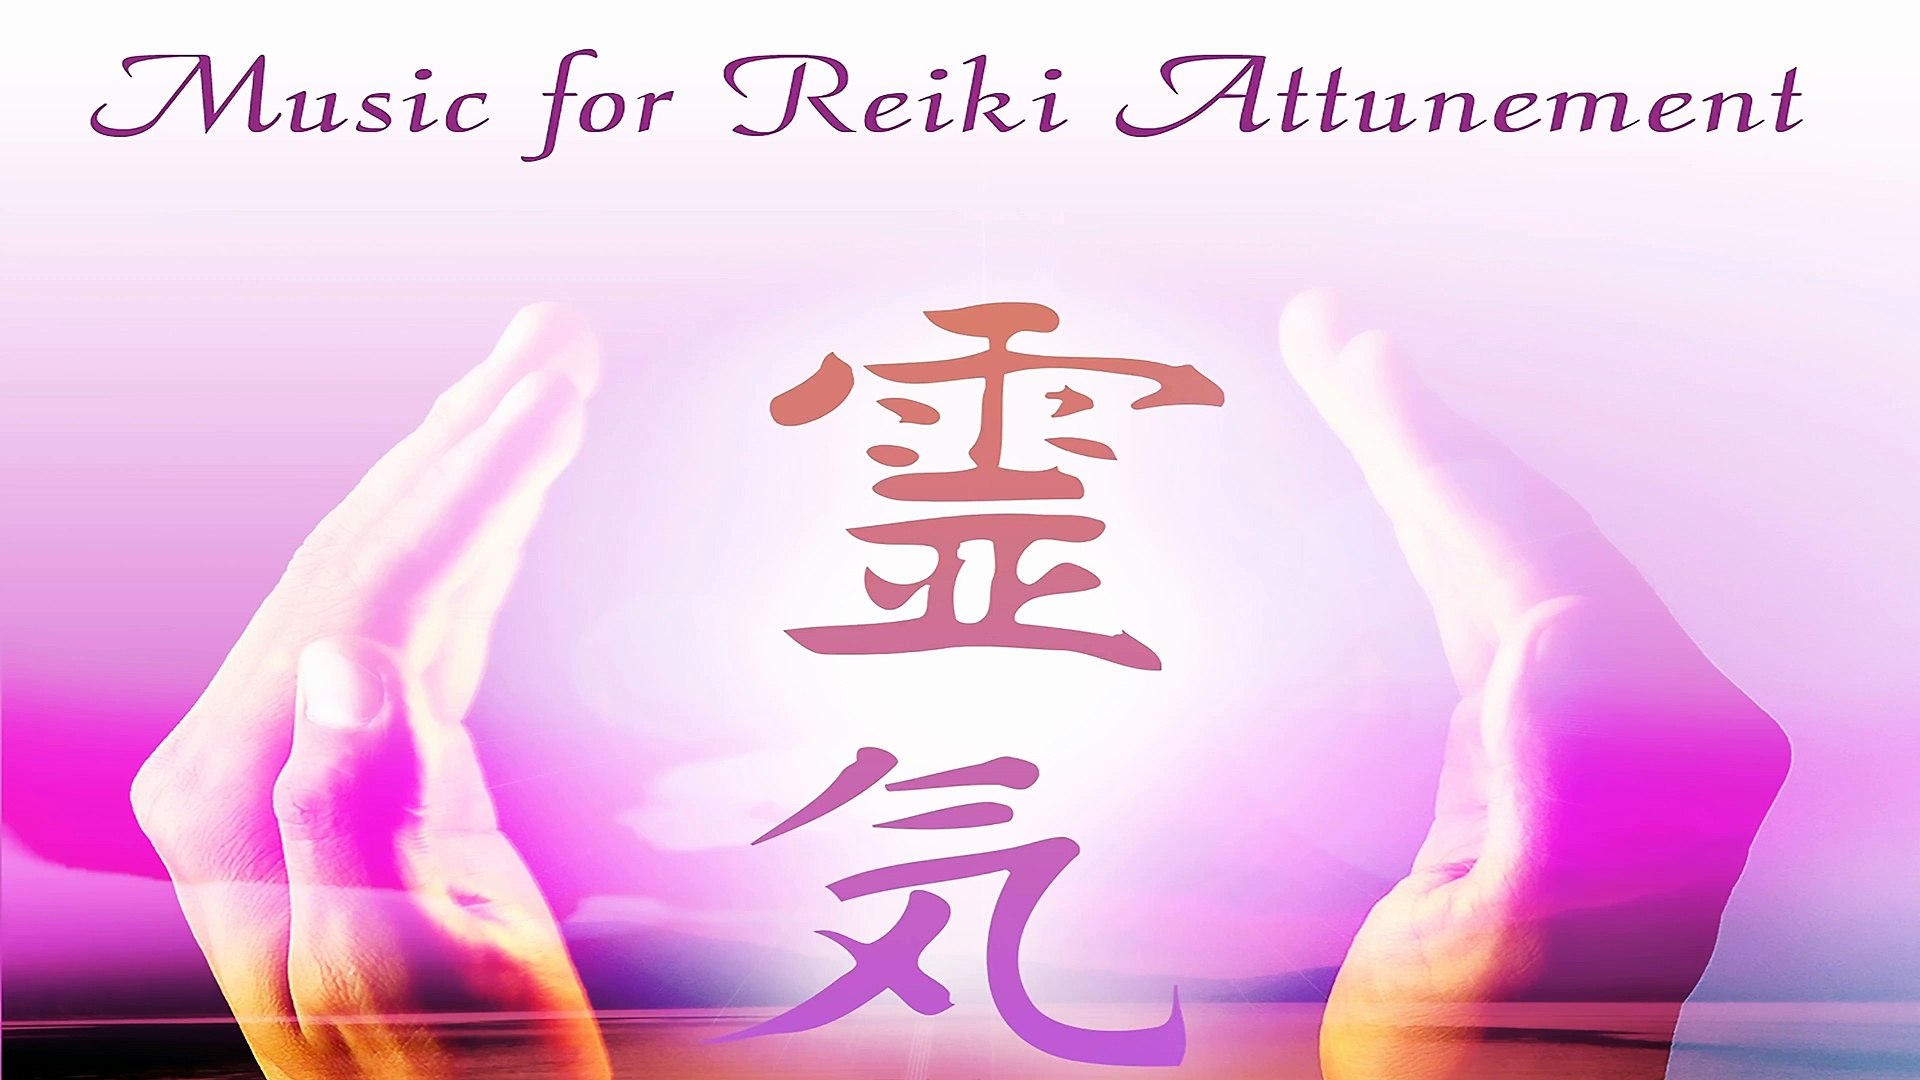 Music for Reiki Attunement , Reiki Music, Meditation Music, SLEEP Music, Relaxing Music for Stress R